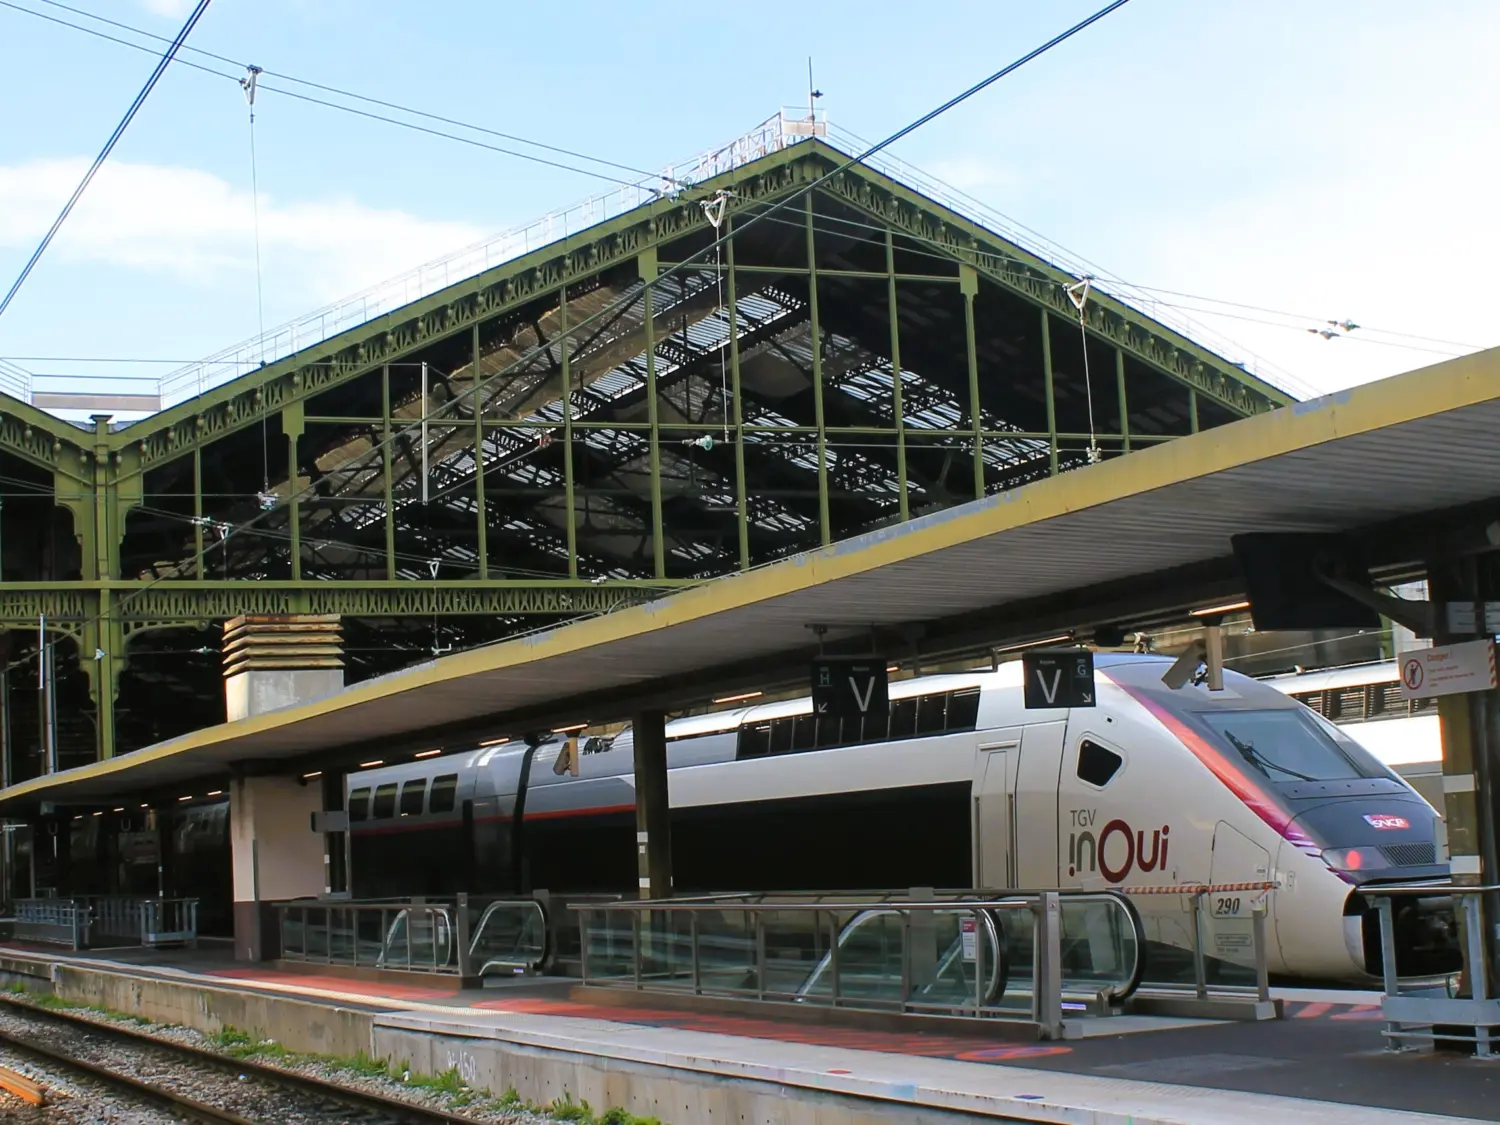 Zug nach Barcelona: TGV InOui im Gleis am Pariser Bahnhof "Gare de Lyon".